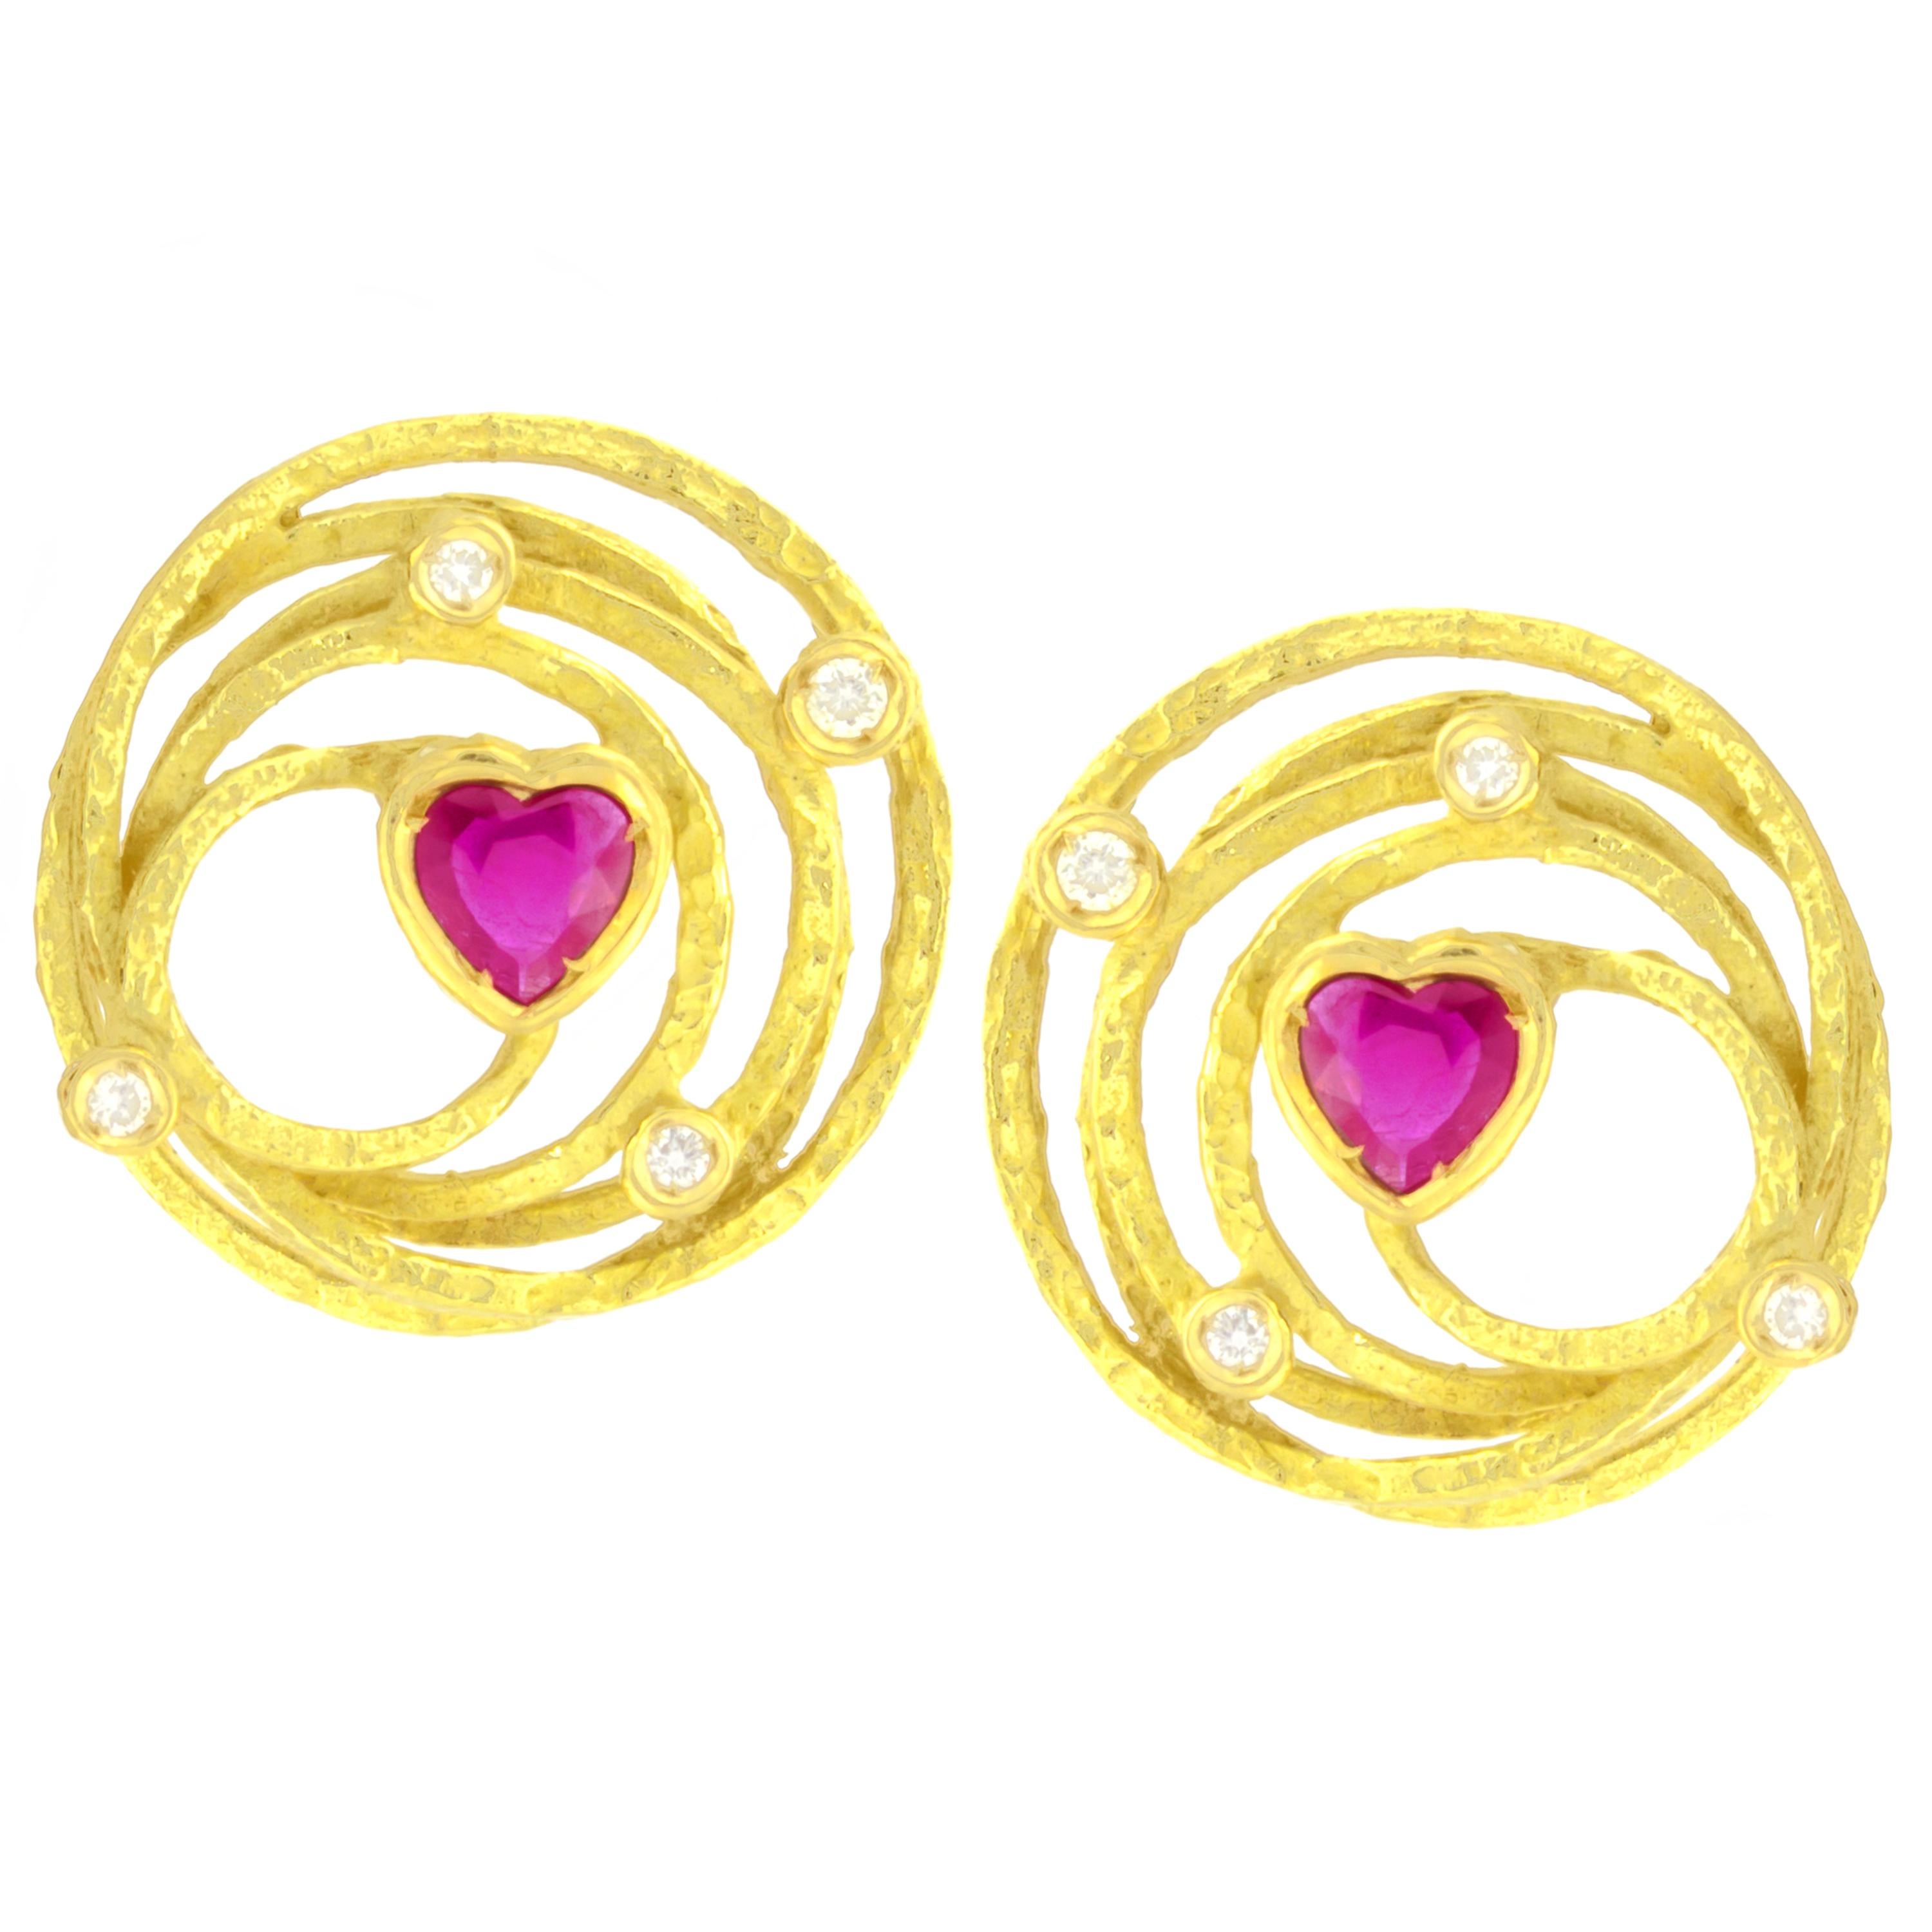 Sacchi Universe Heart Ruby and Diamonds Gemstones 18 Karat Yellow Gold Earrings